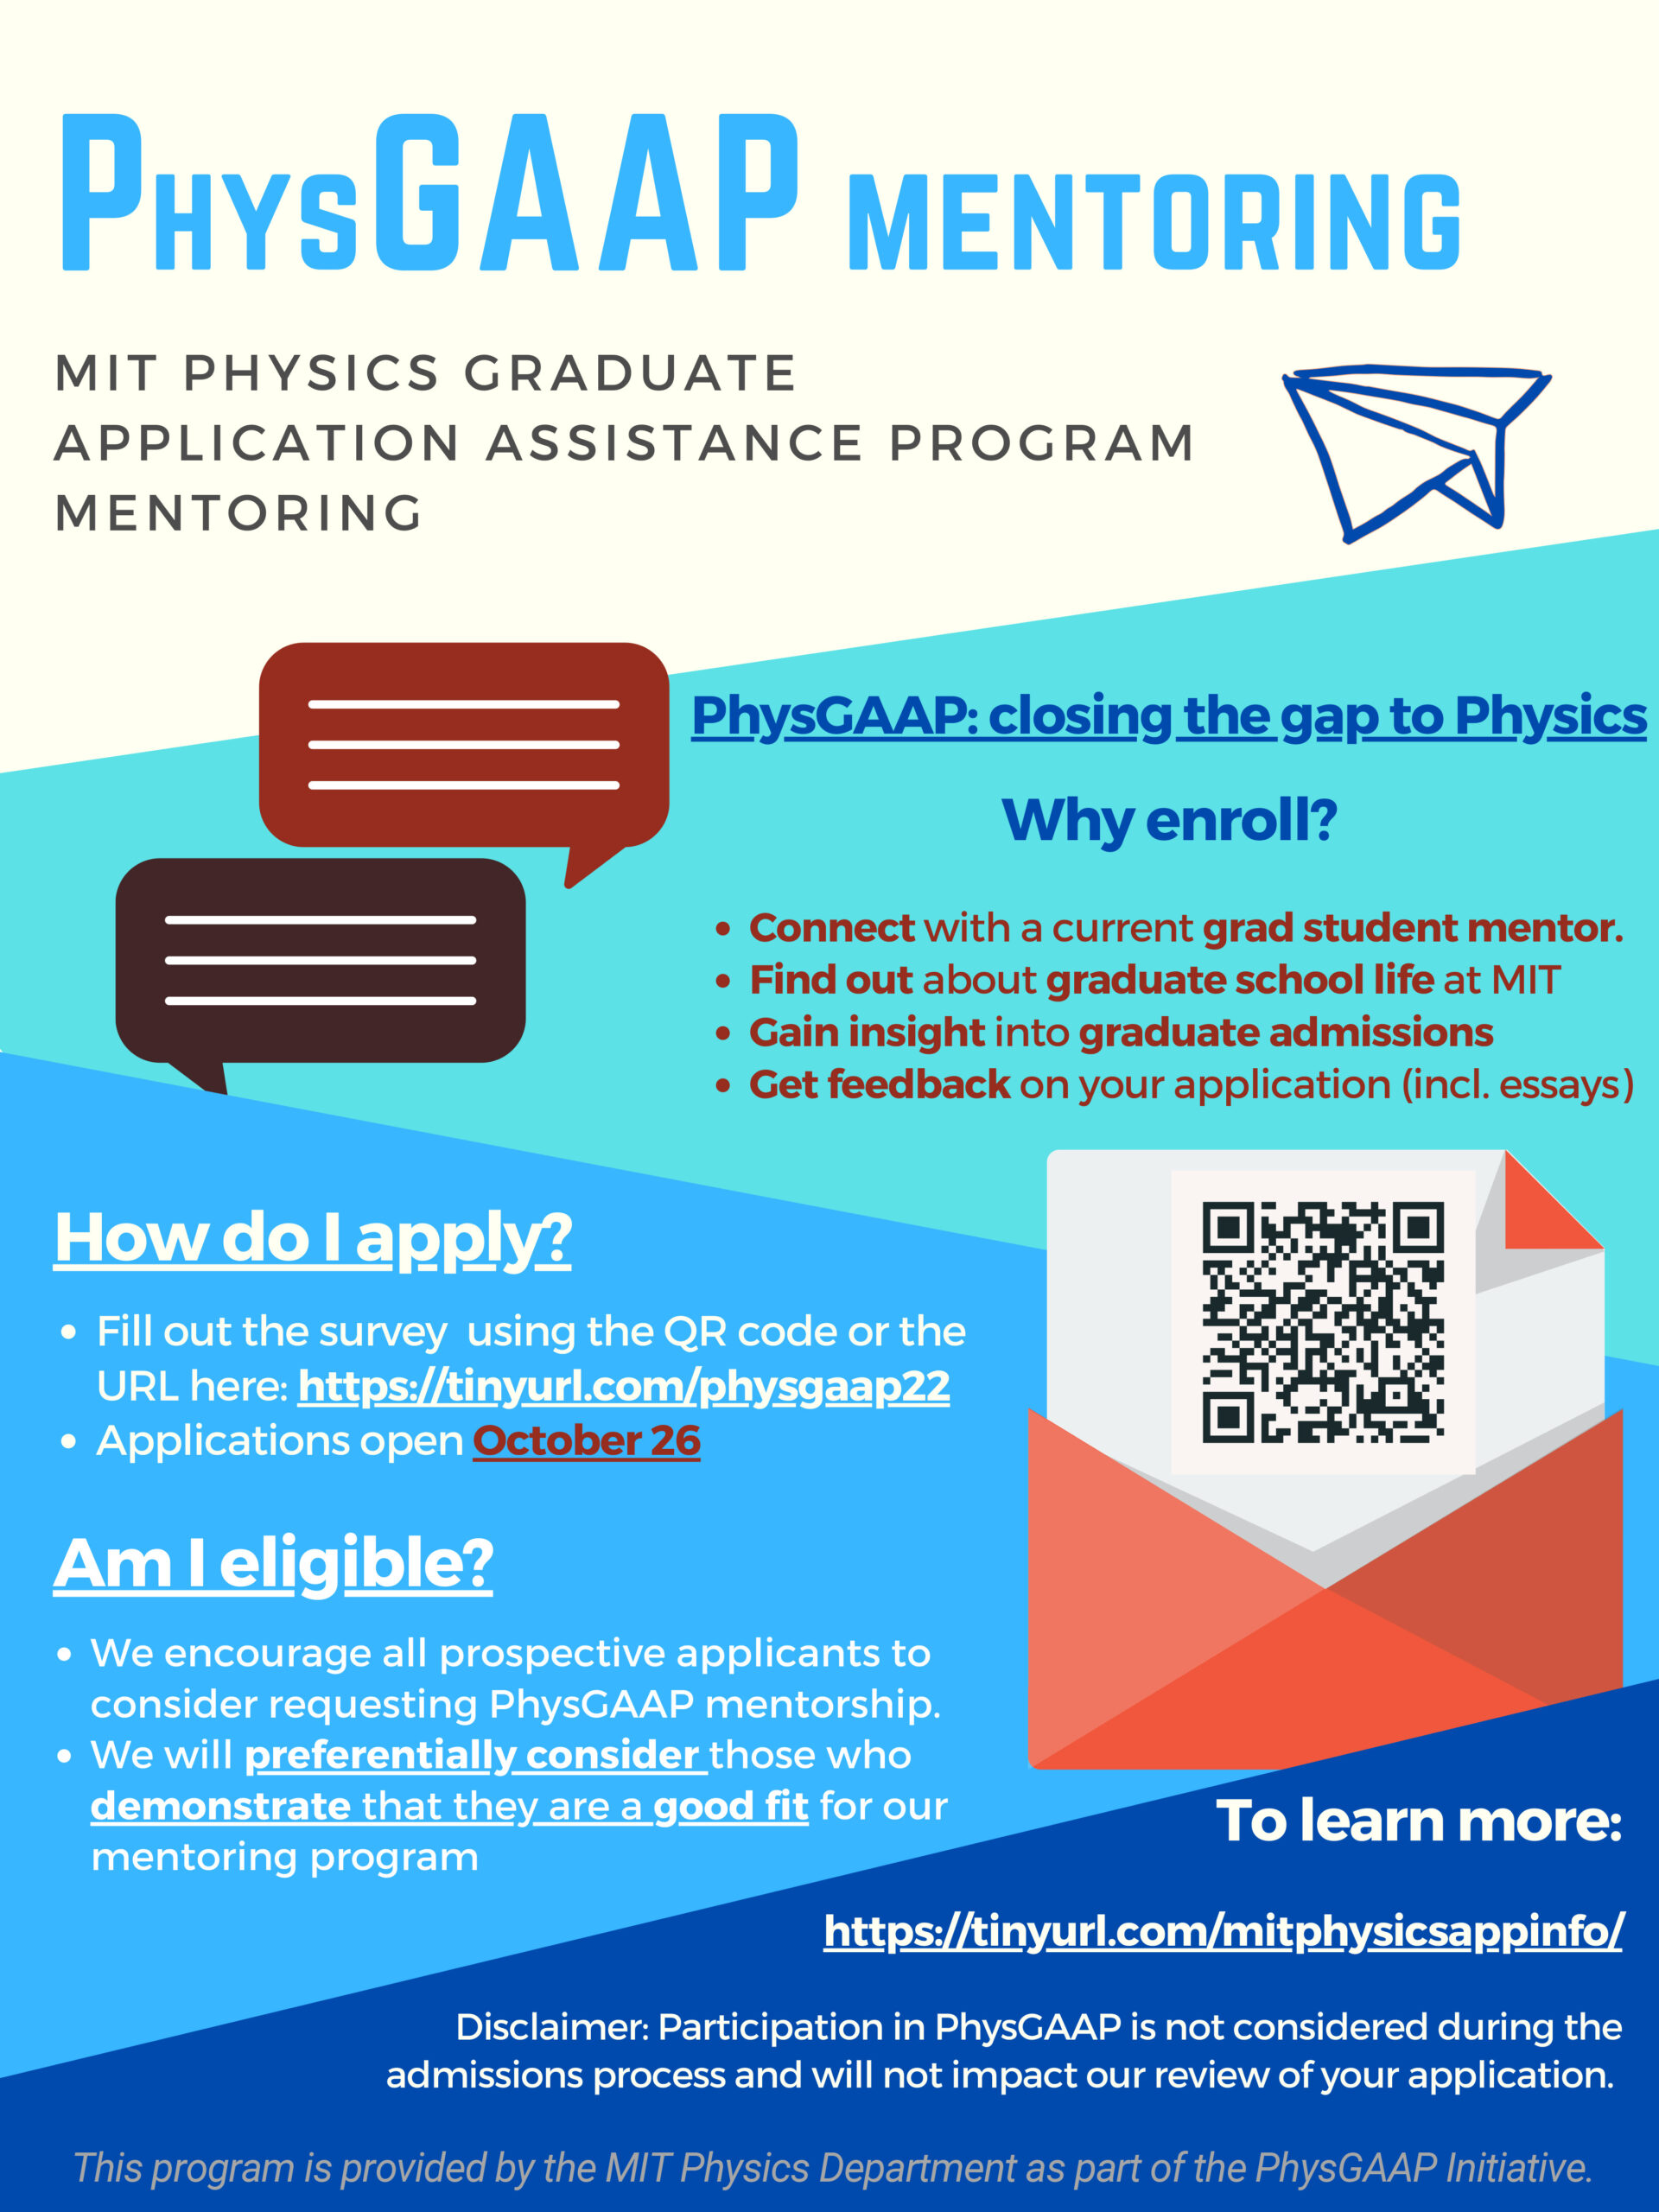 mit physics phd application deadline